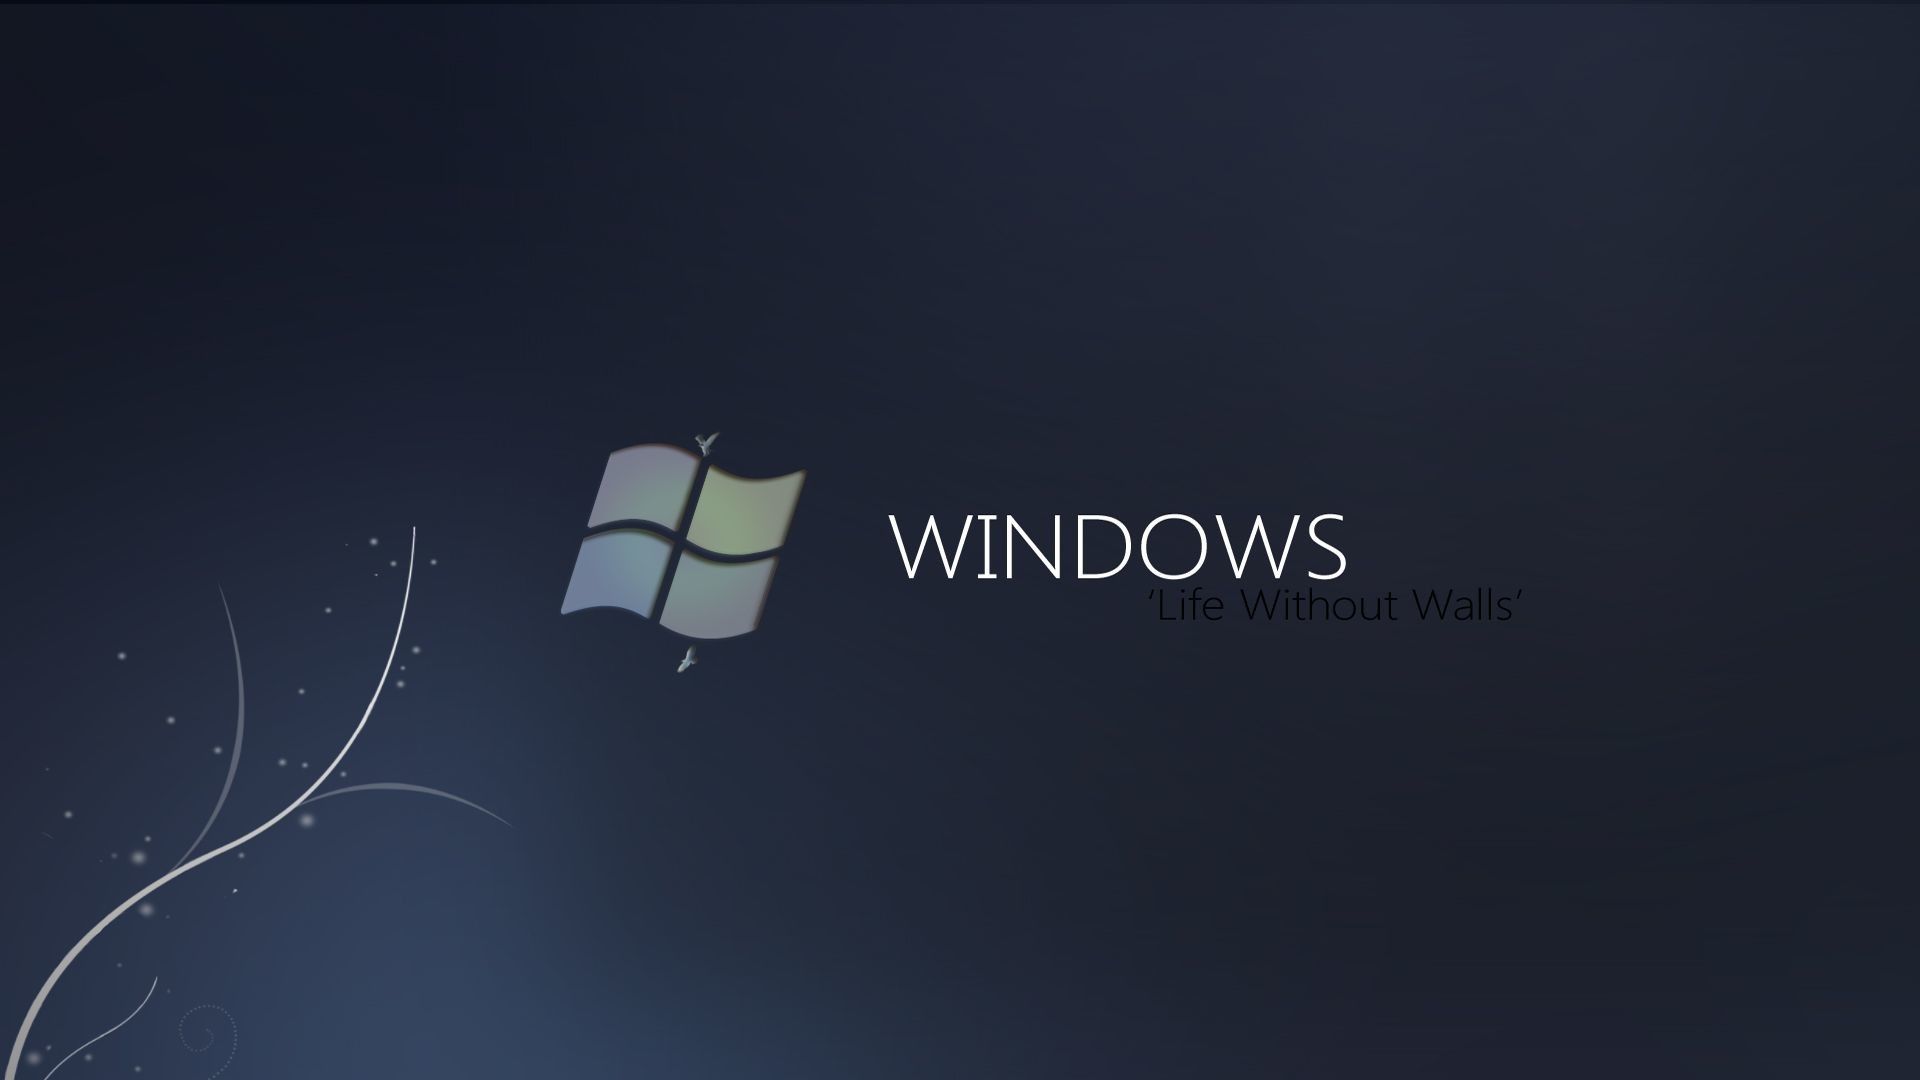 Windows Server Wallpaper background picture